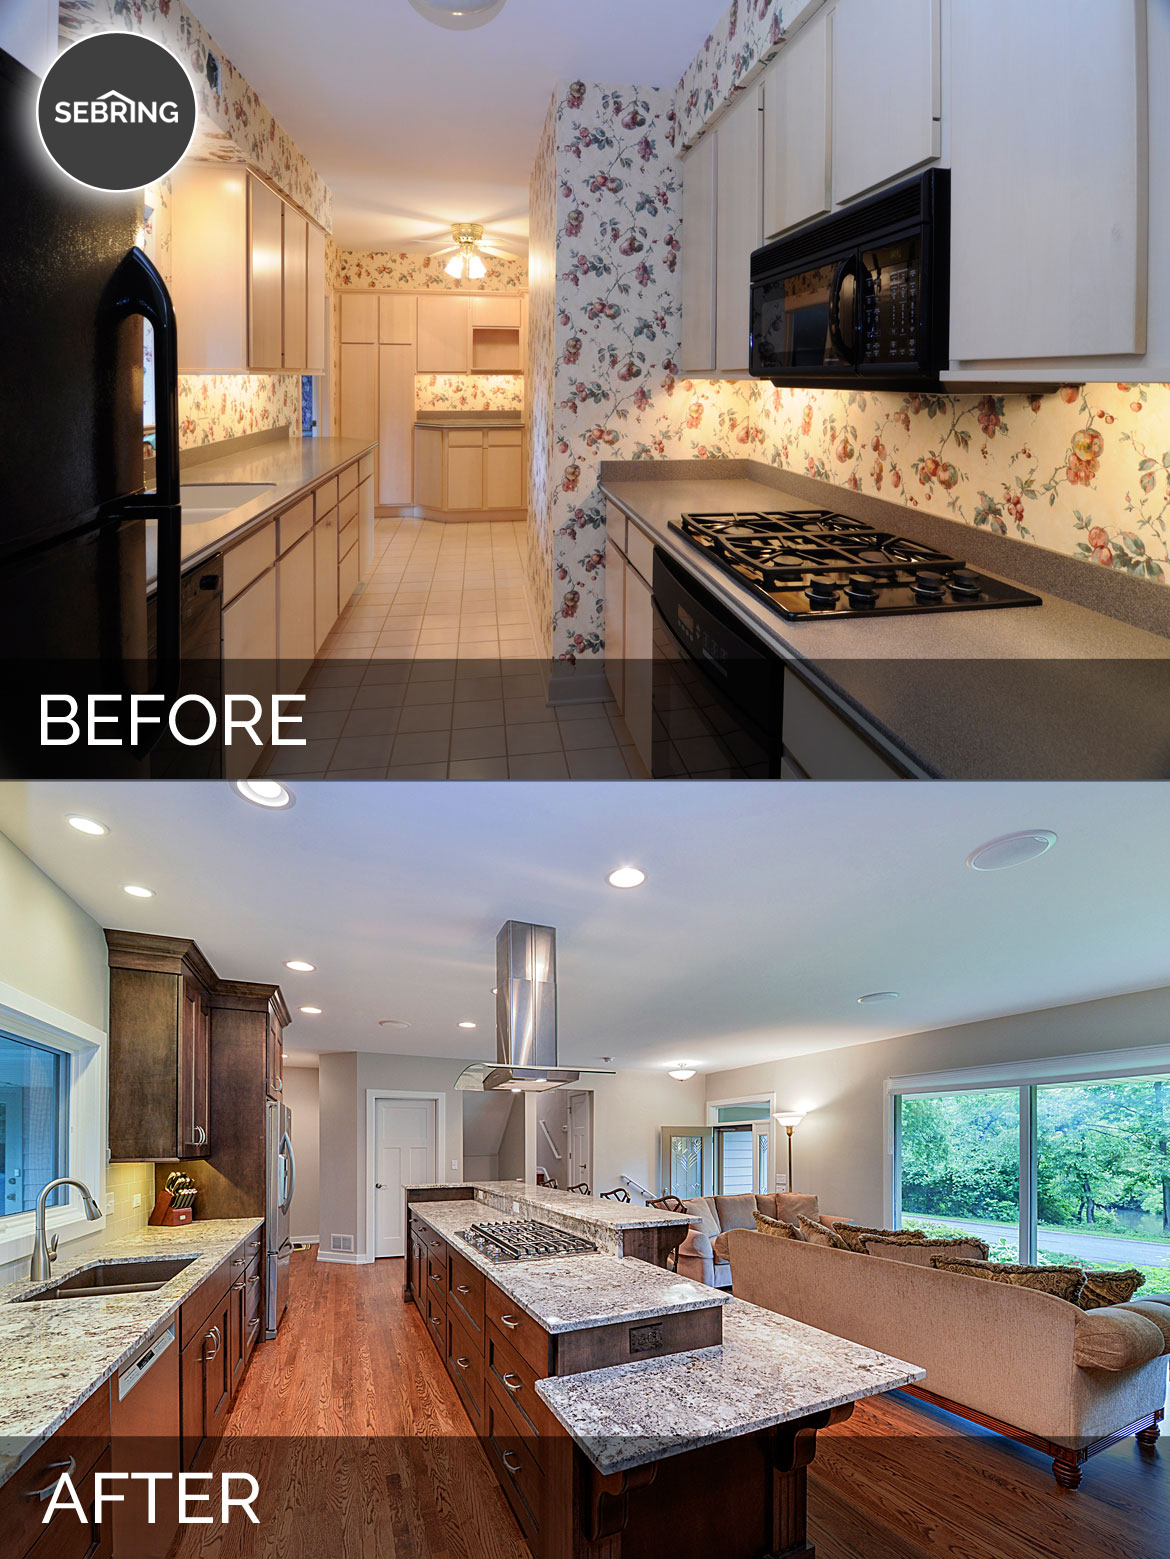 Dan & Ann's Kitchen Before & After Pictures - Sebring Design Build